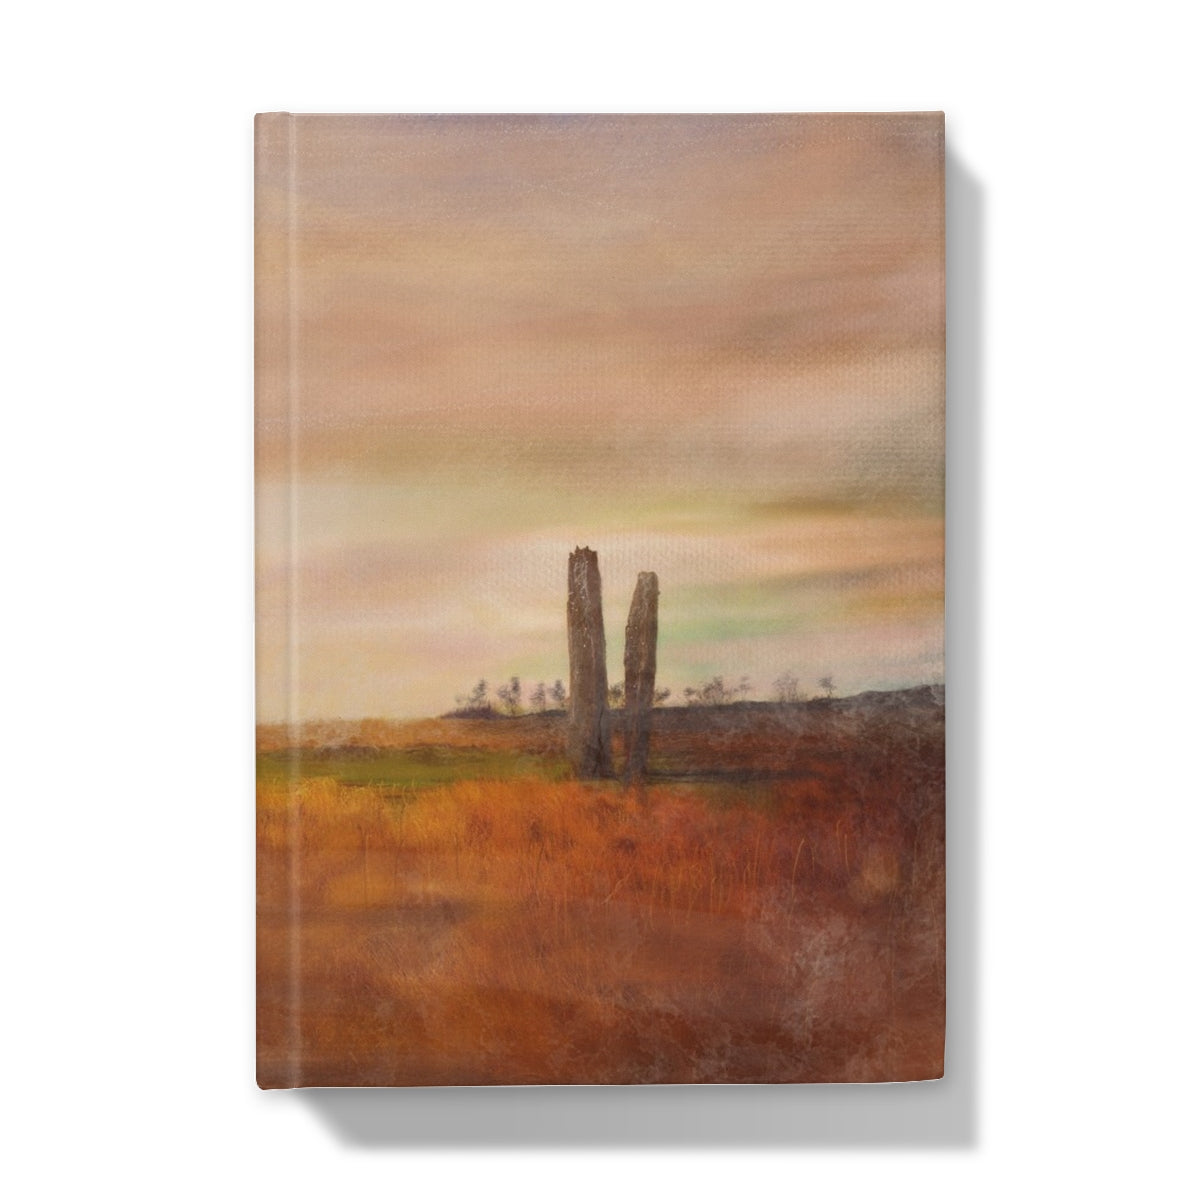 Machrie Moor Arran Art Gifts Hardback Journal-Journals & Notebooks-Arran Art Gallery-A4-Lined-Paintings, Prints, Homeware, Art Gifts From Scotland By Scottish Artist Kevin Hunter